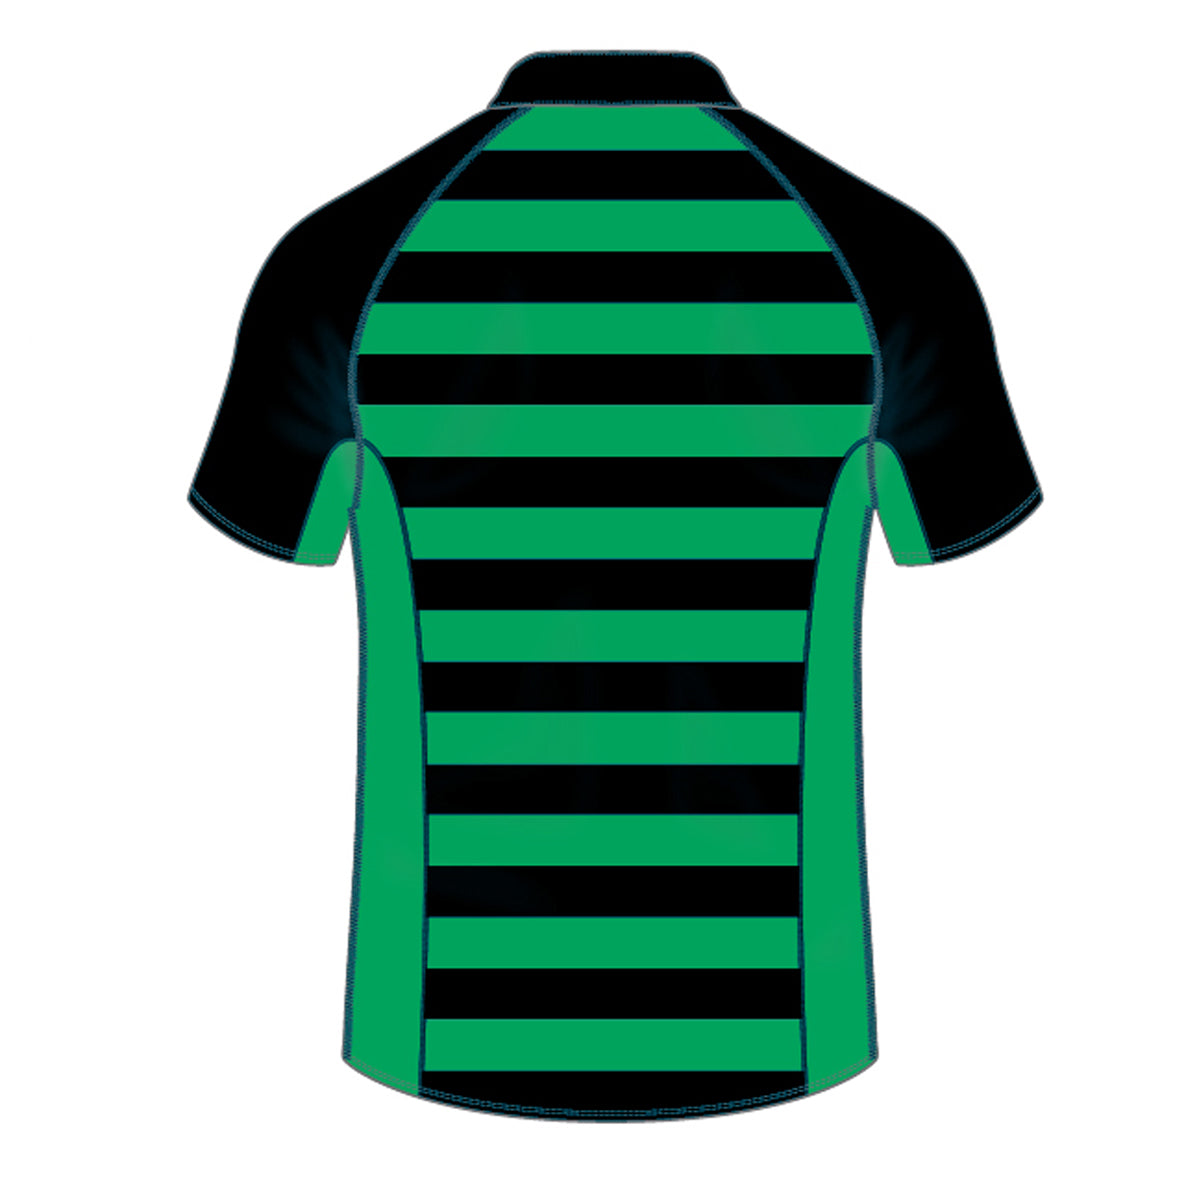 Sullivan Upper School Rugby Shirt